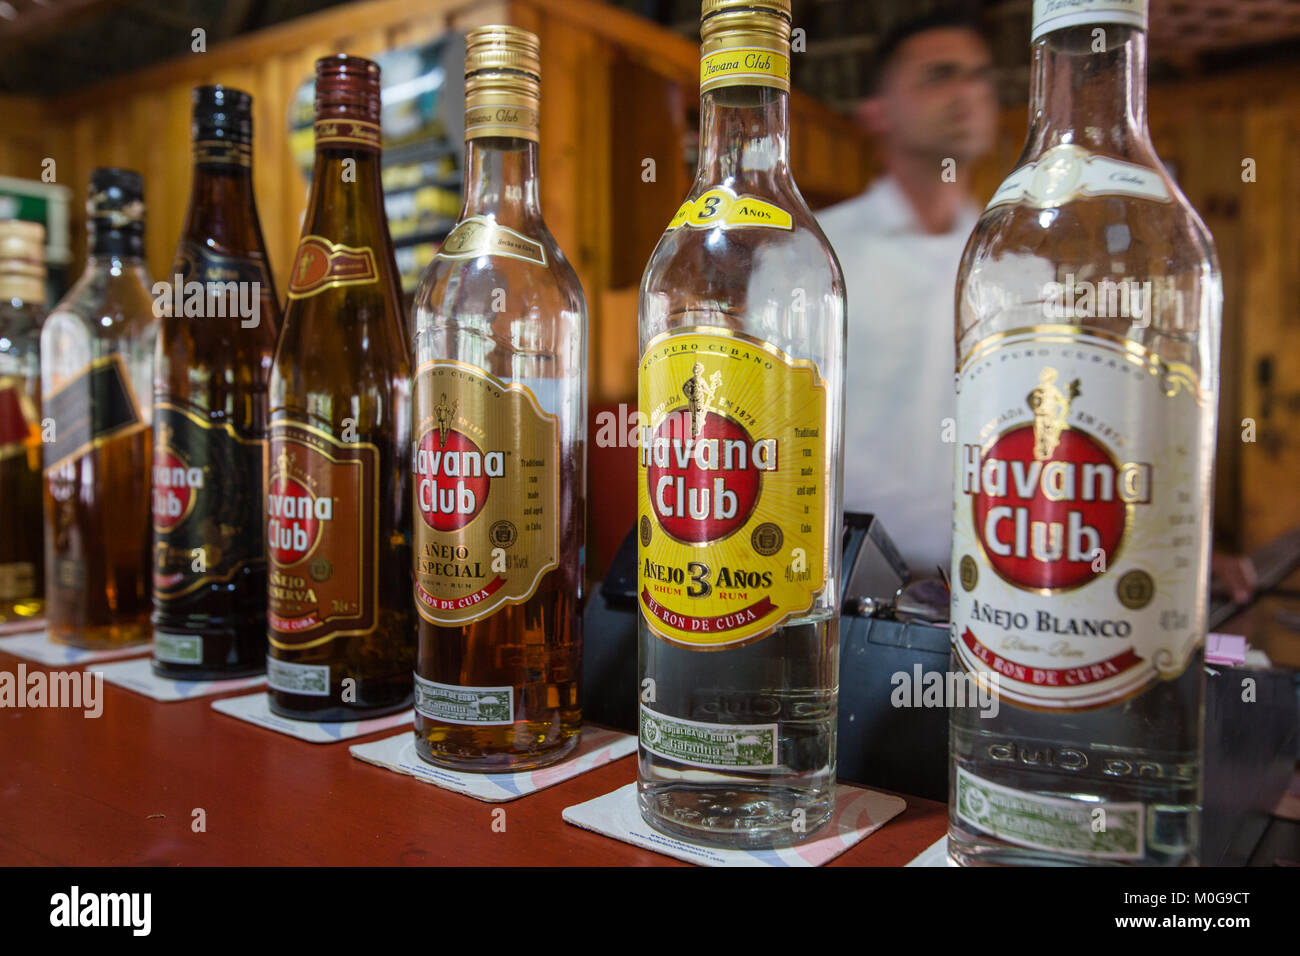 Havana Club rum bottles at Rio Guanayara bar, Cuba Stock Photo